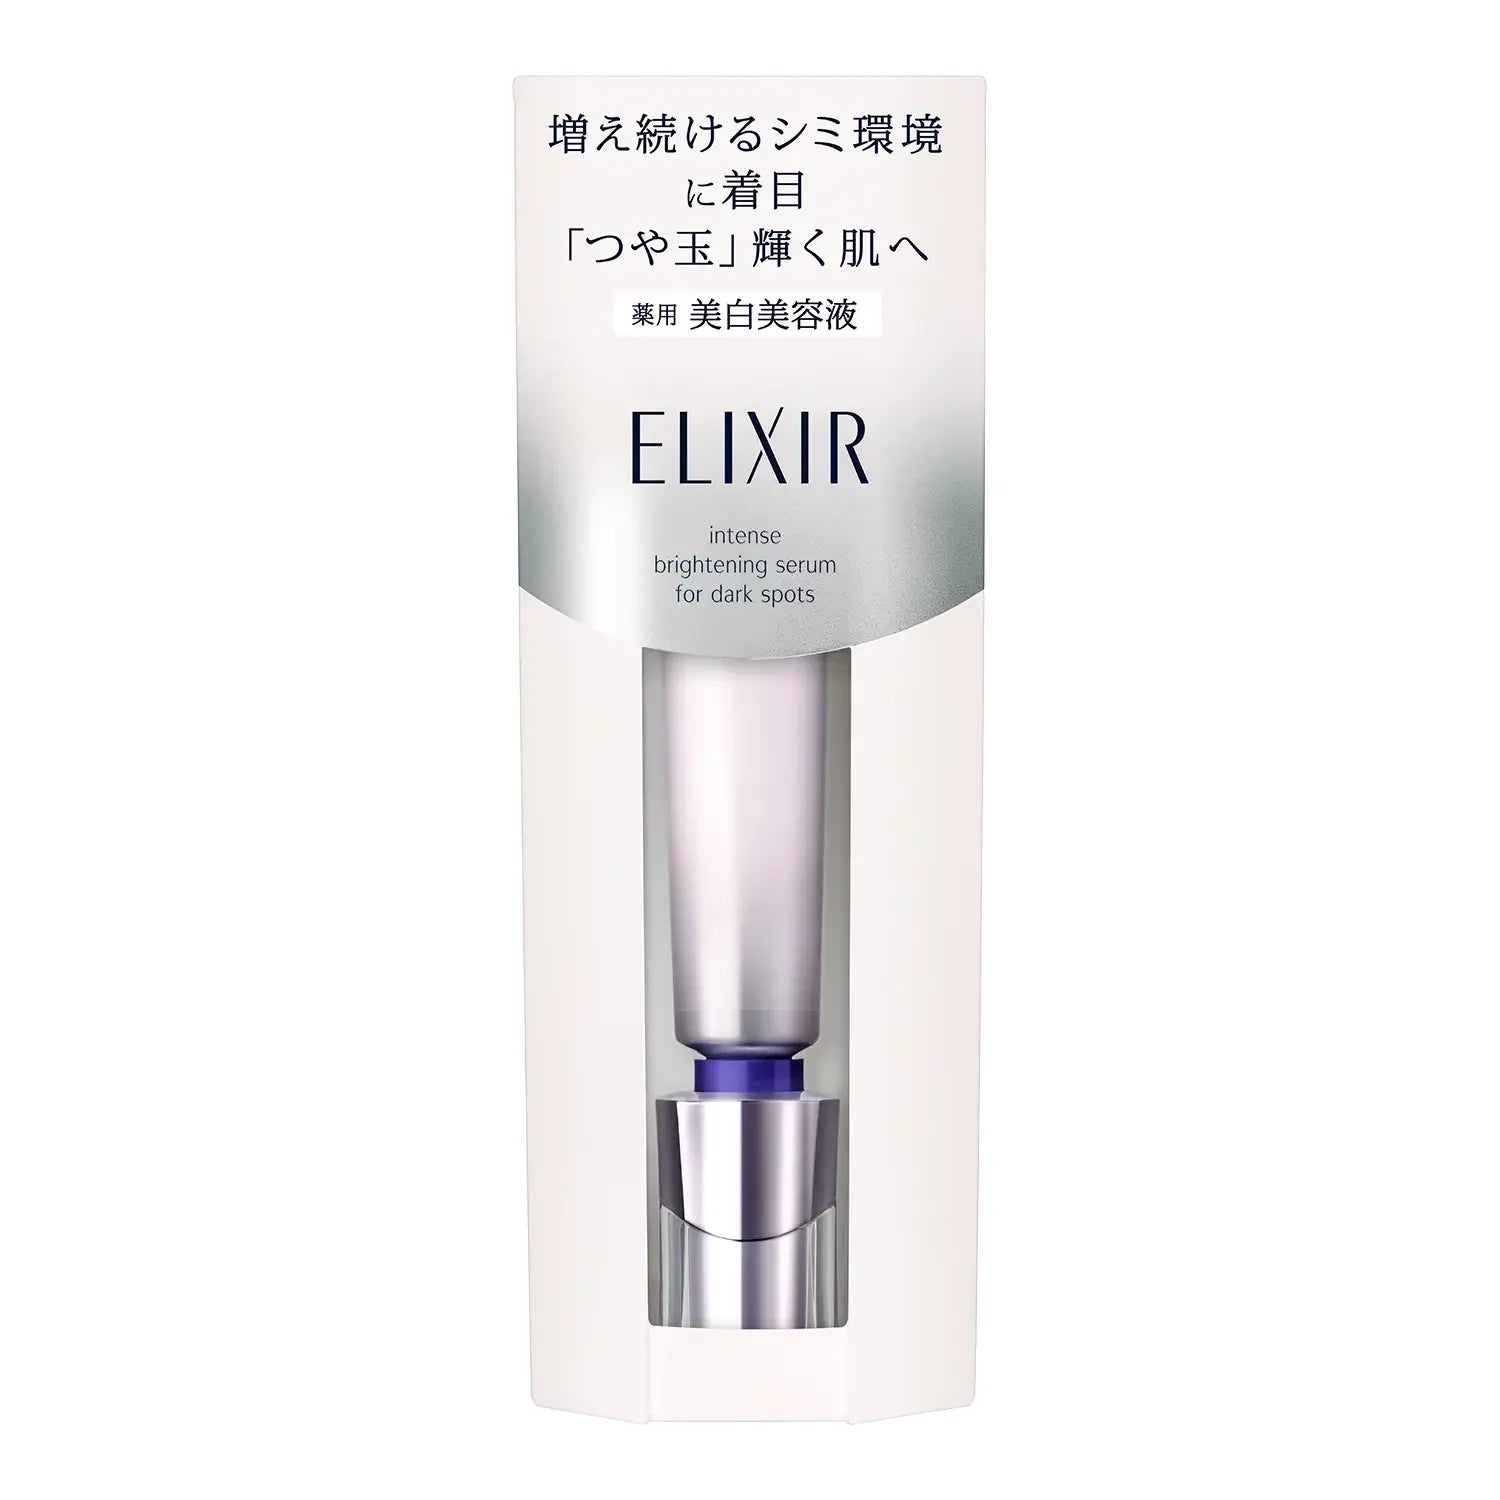 Shiseido Elixir Spot Clear Serum Anti Dark Spot Beauty Treatment 22g